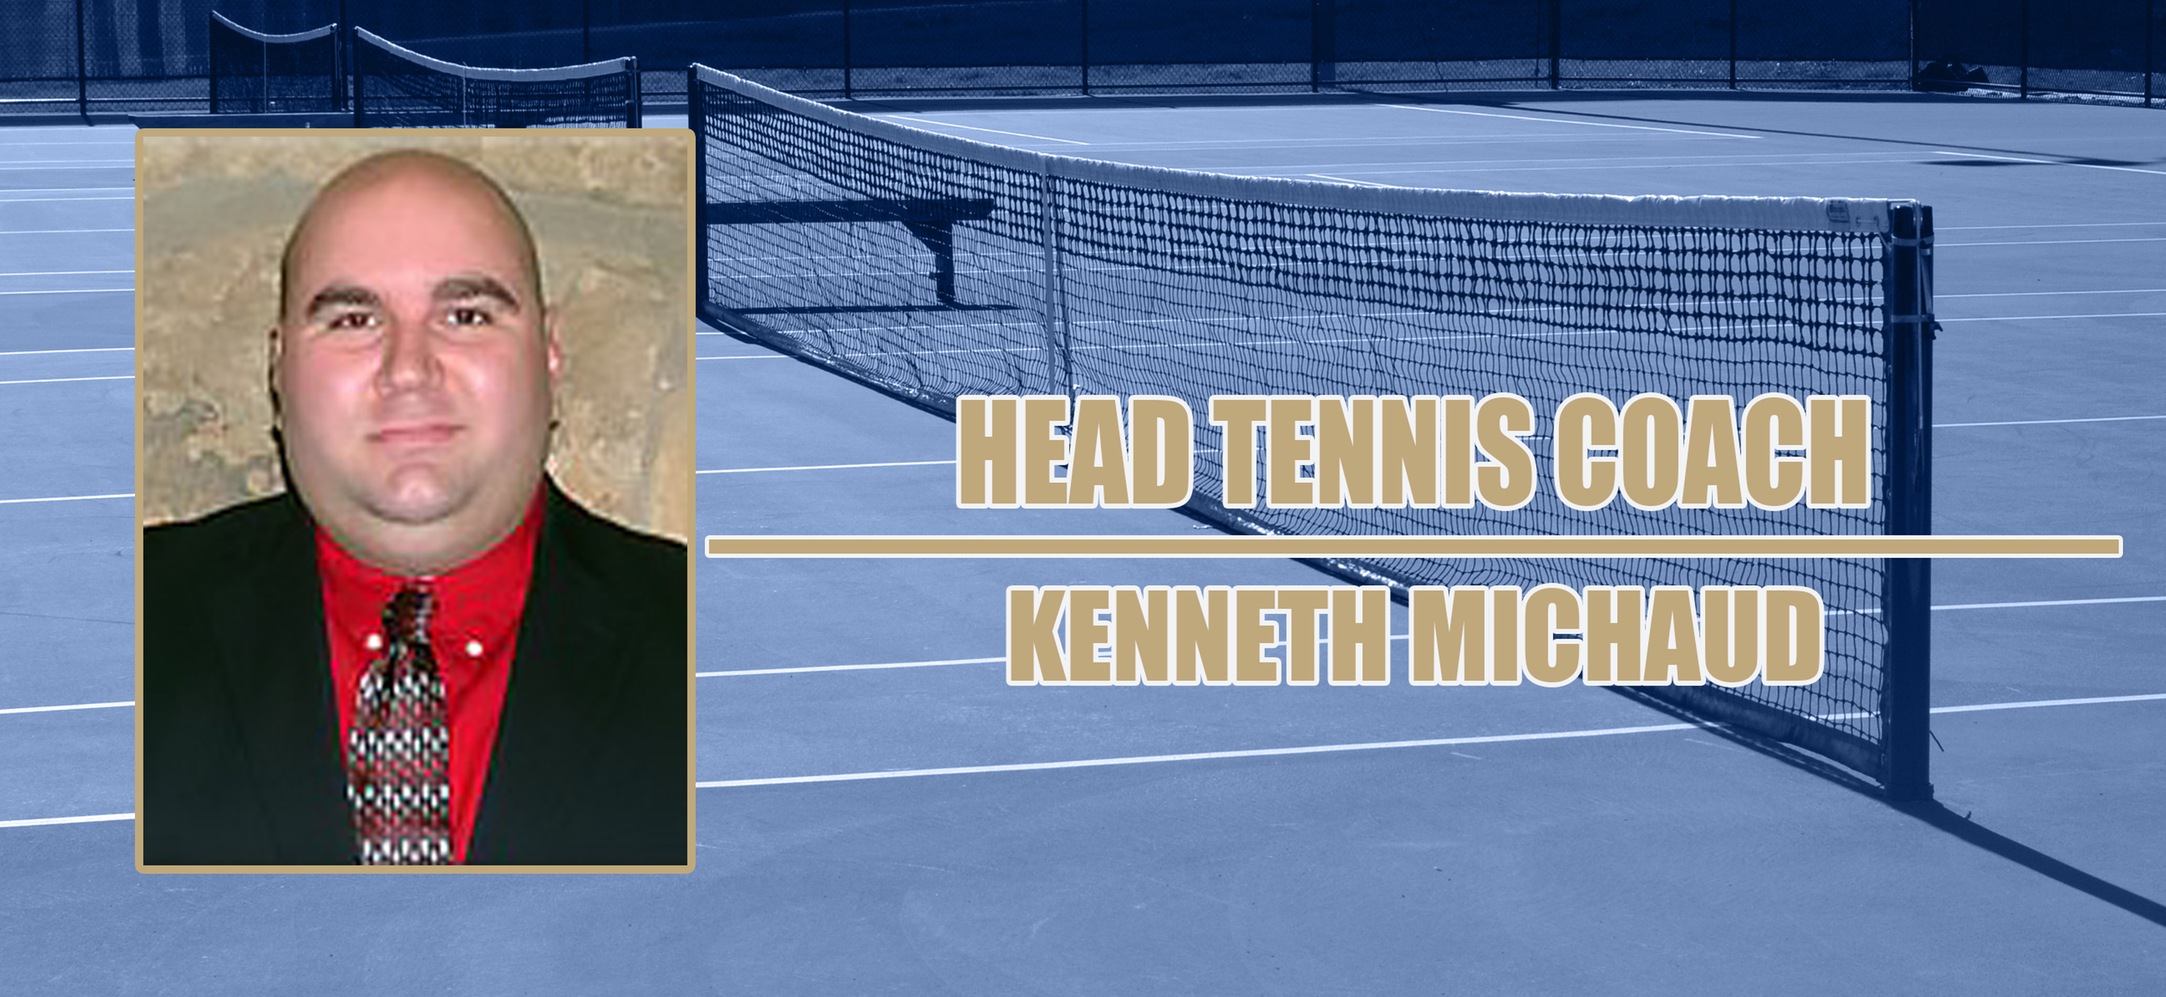 Michaud Added as Head Tennis Coach